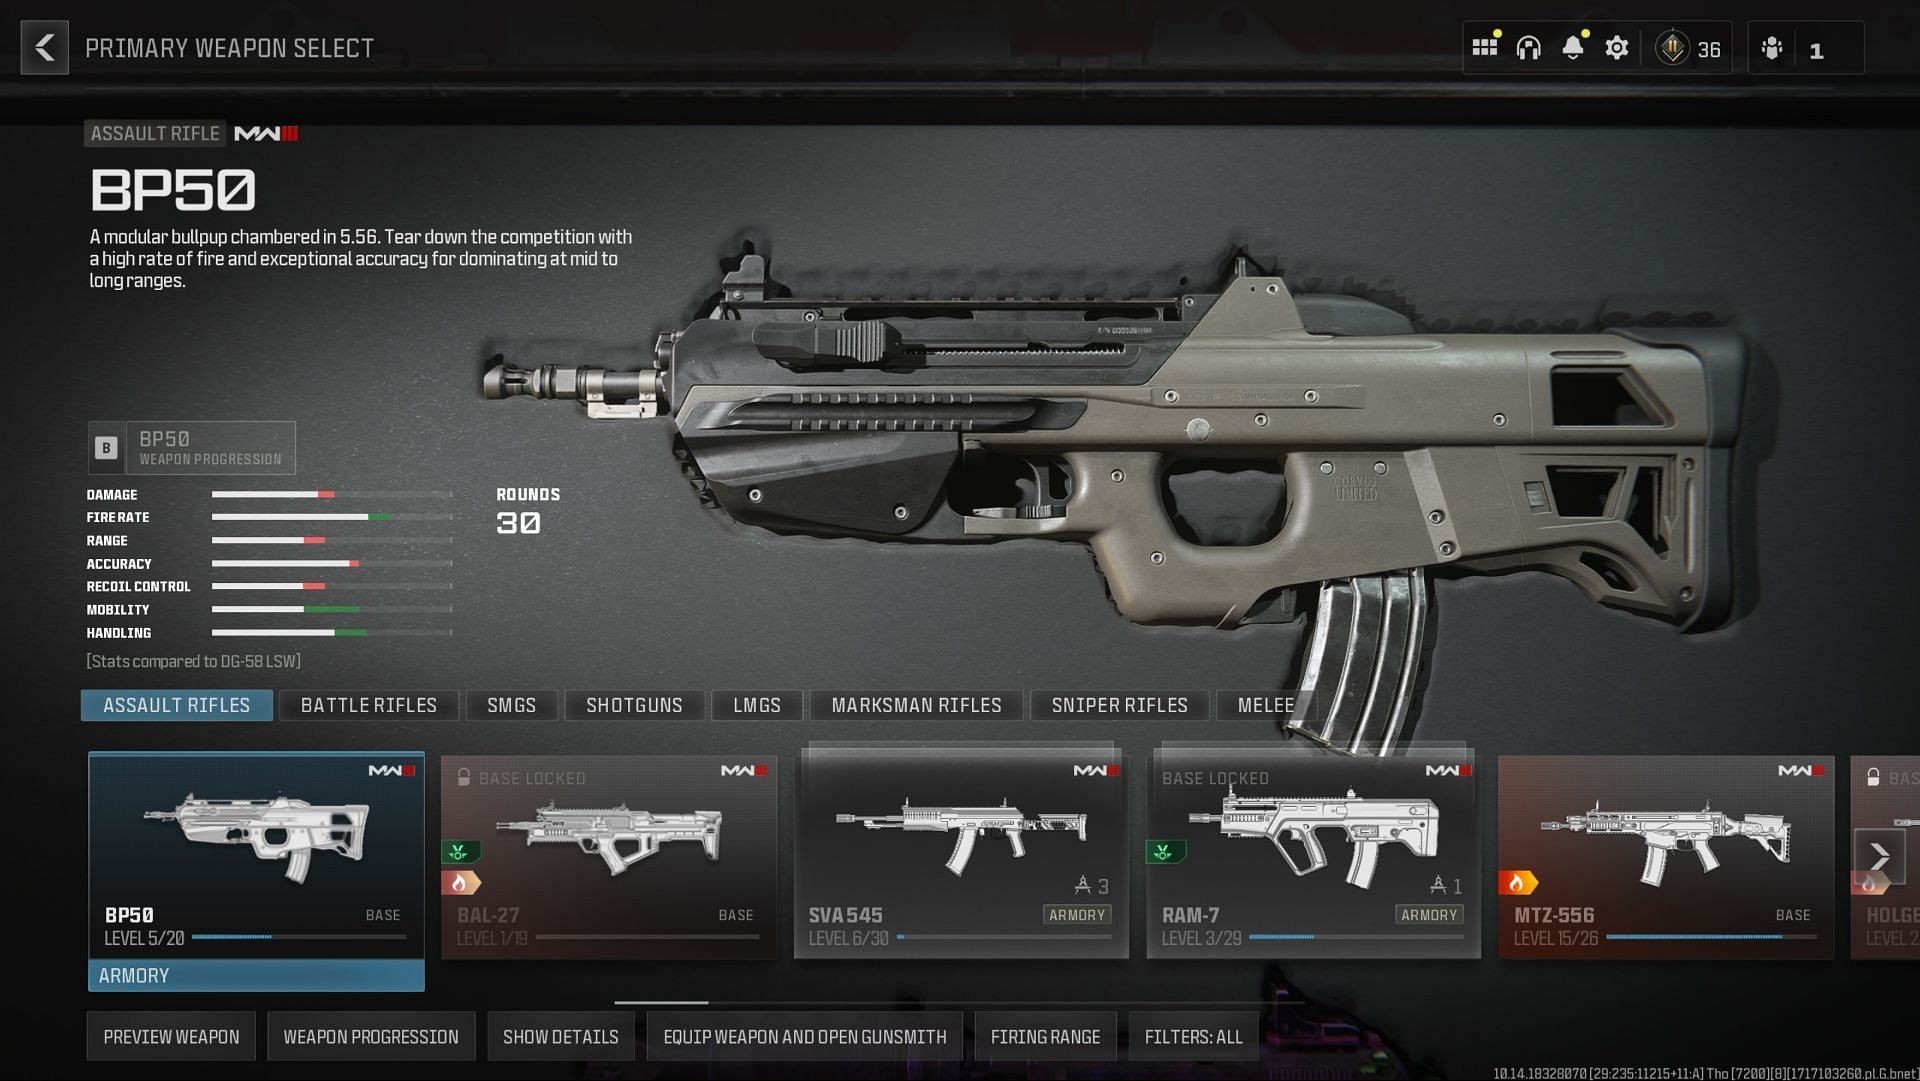 BP50 assault rifle (Image via Activision)